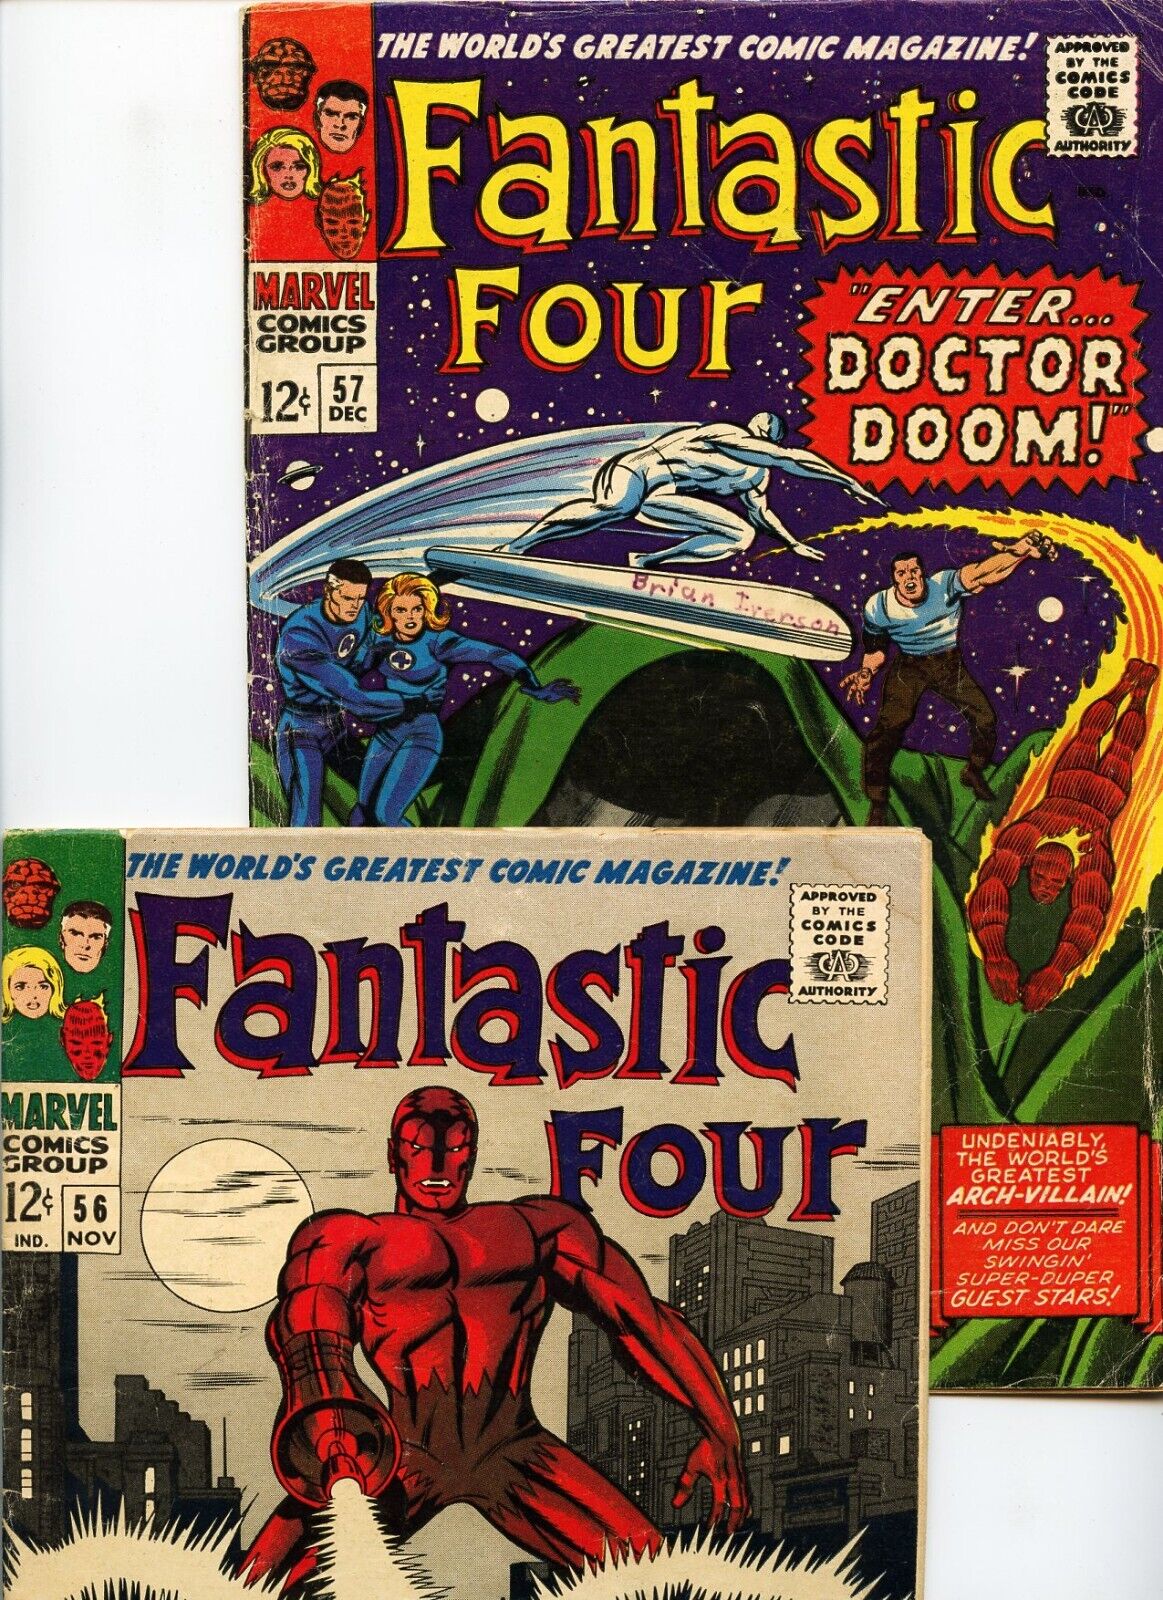 Fantastic Four #56 and #57 Marvel Comics Lot of 2 Books